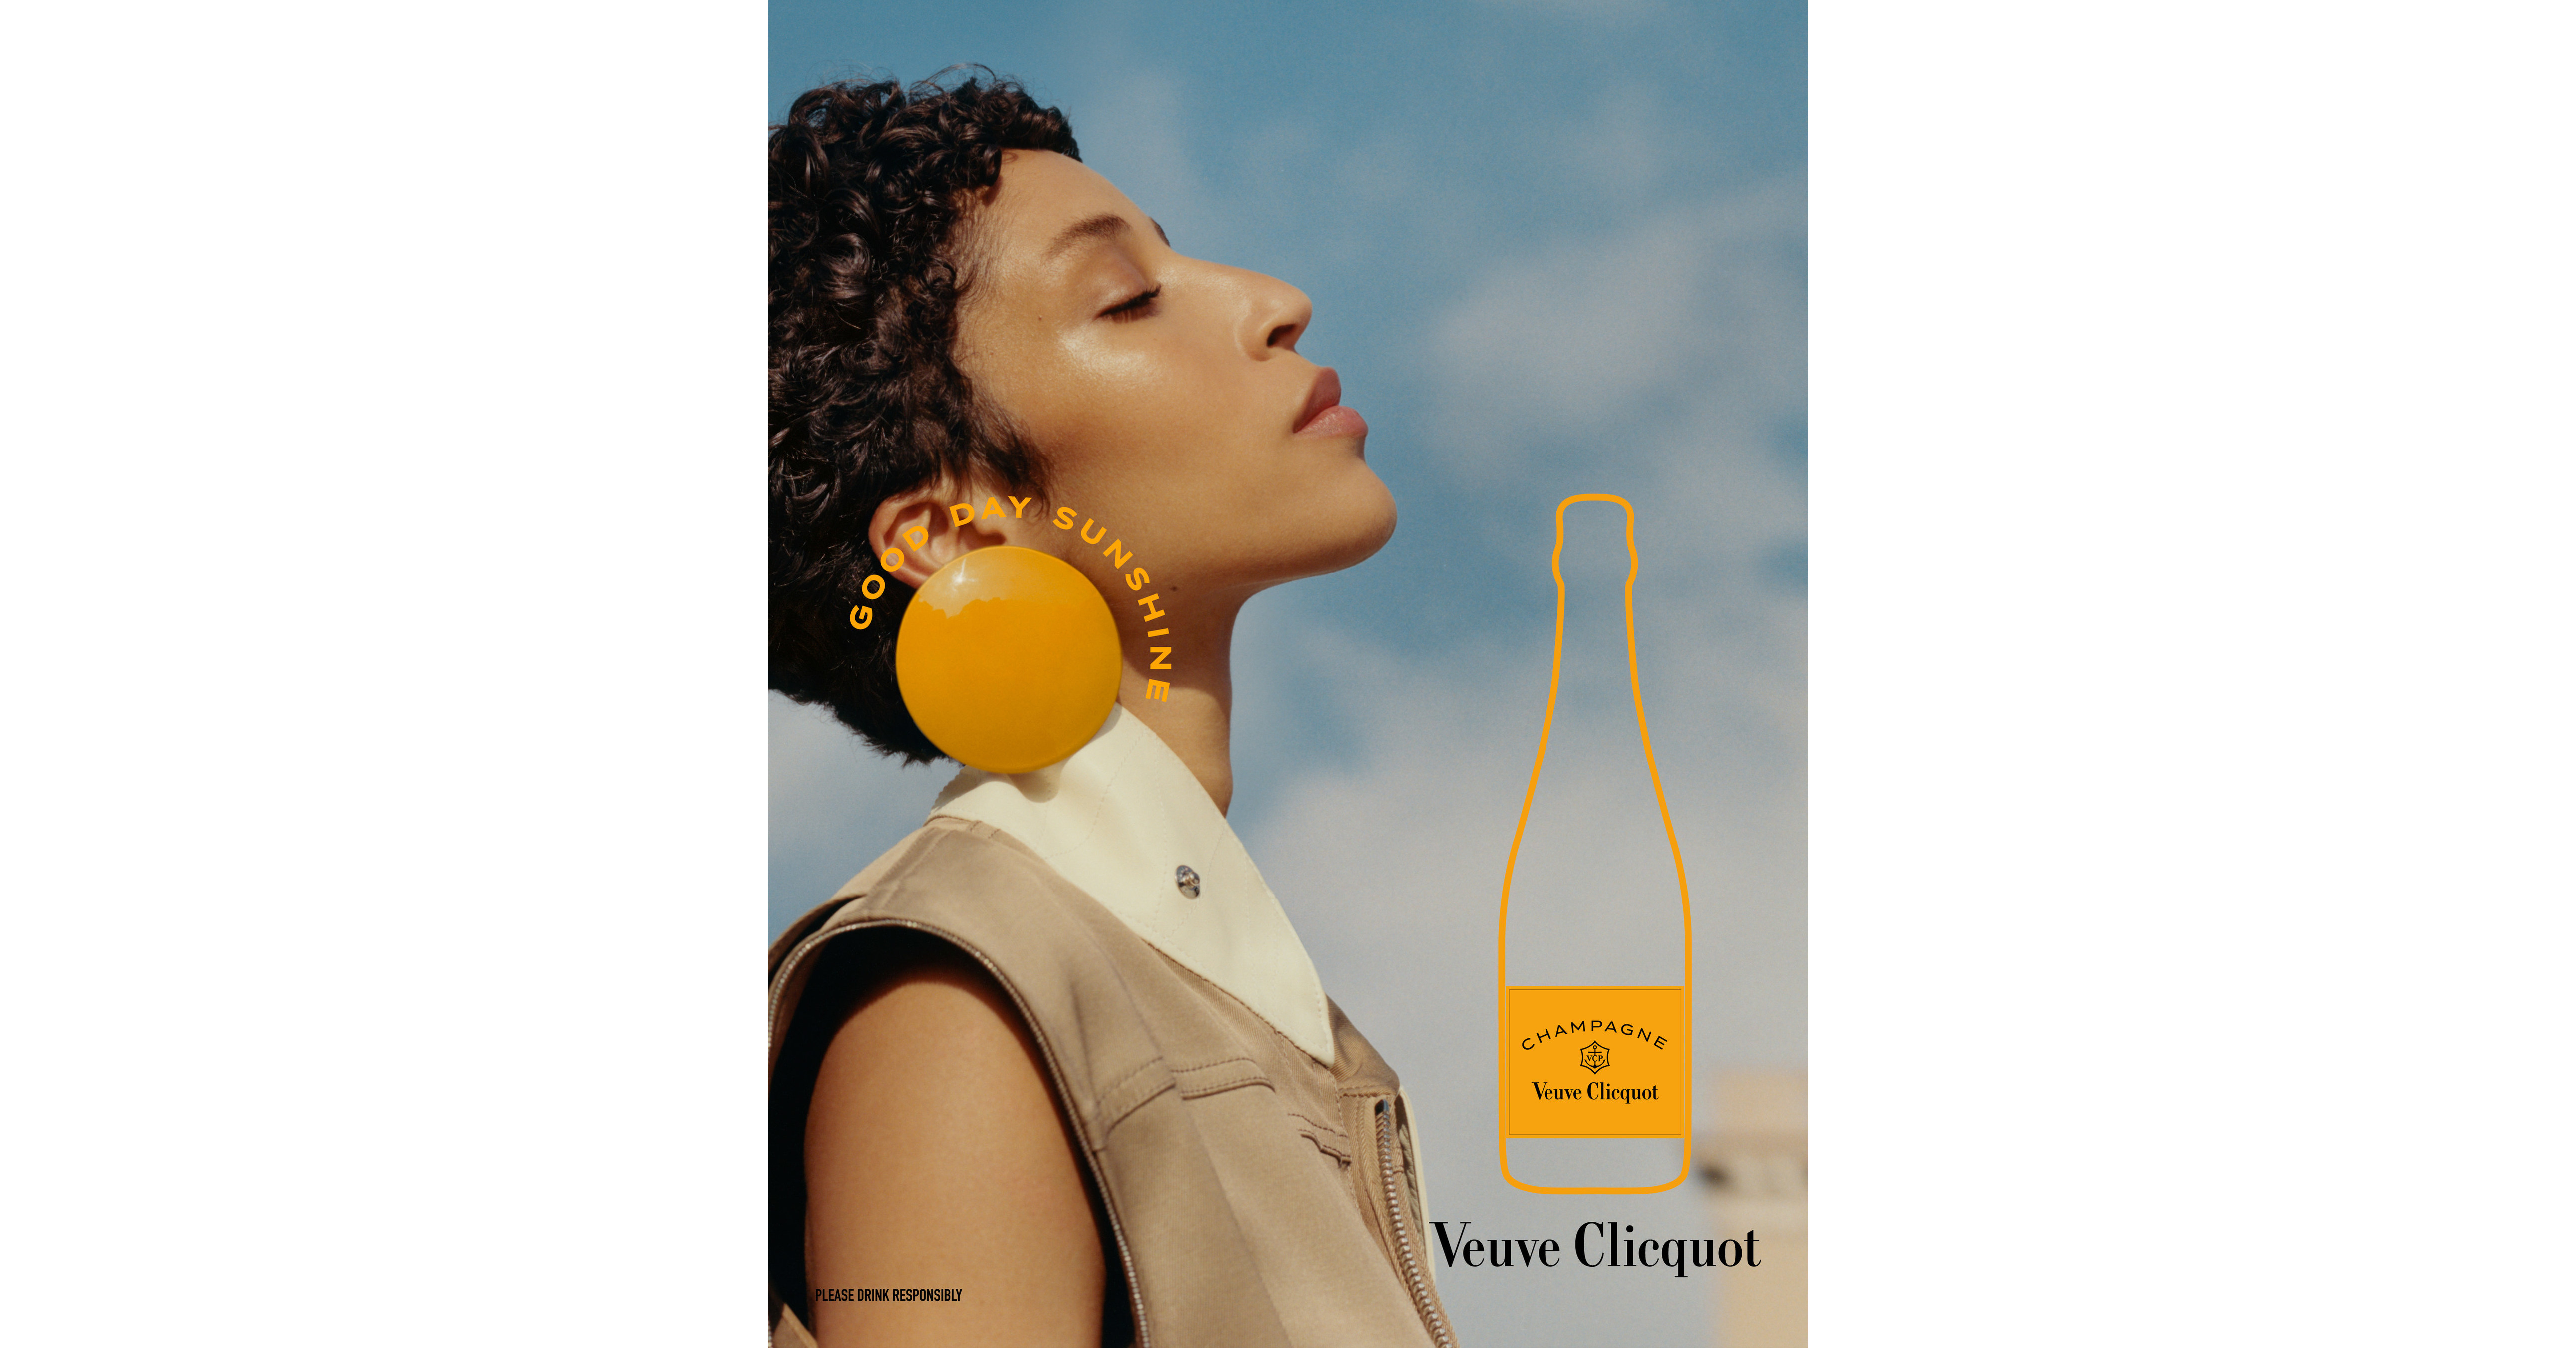 Veuve Clicquot Campaign 2009-2013 